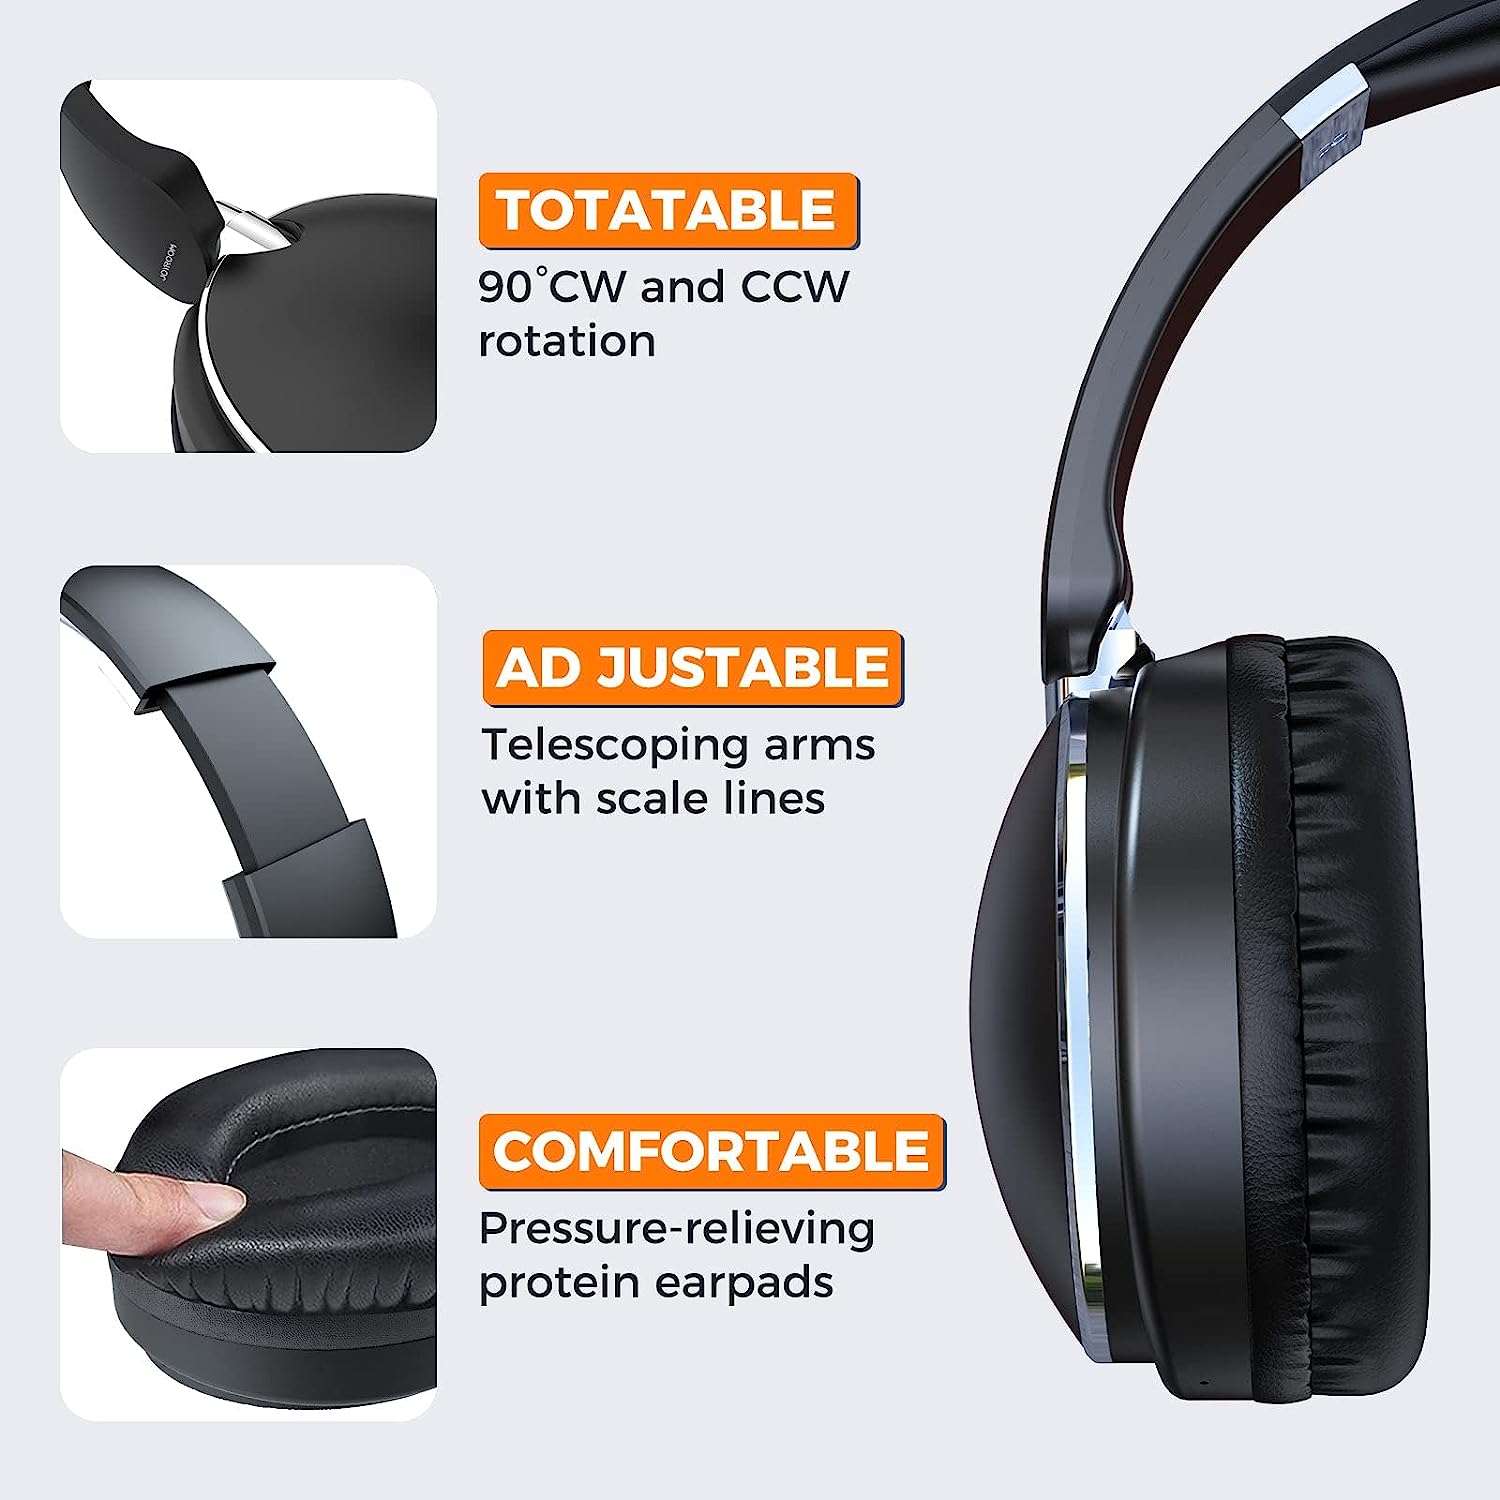 Joyroom Foldable Wireless Bluetooth Deep Bass Stereo Headphone - Black